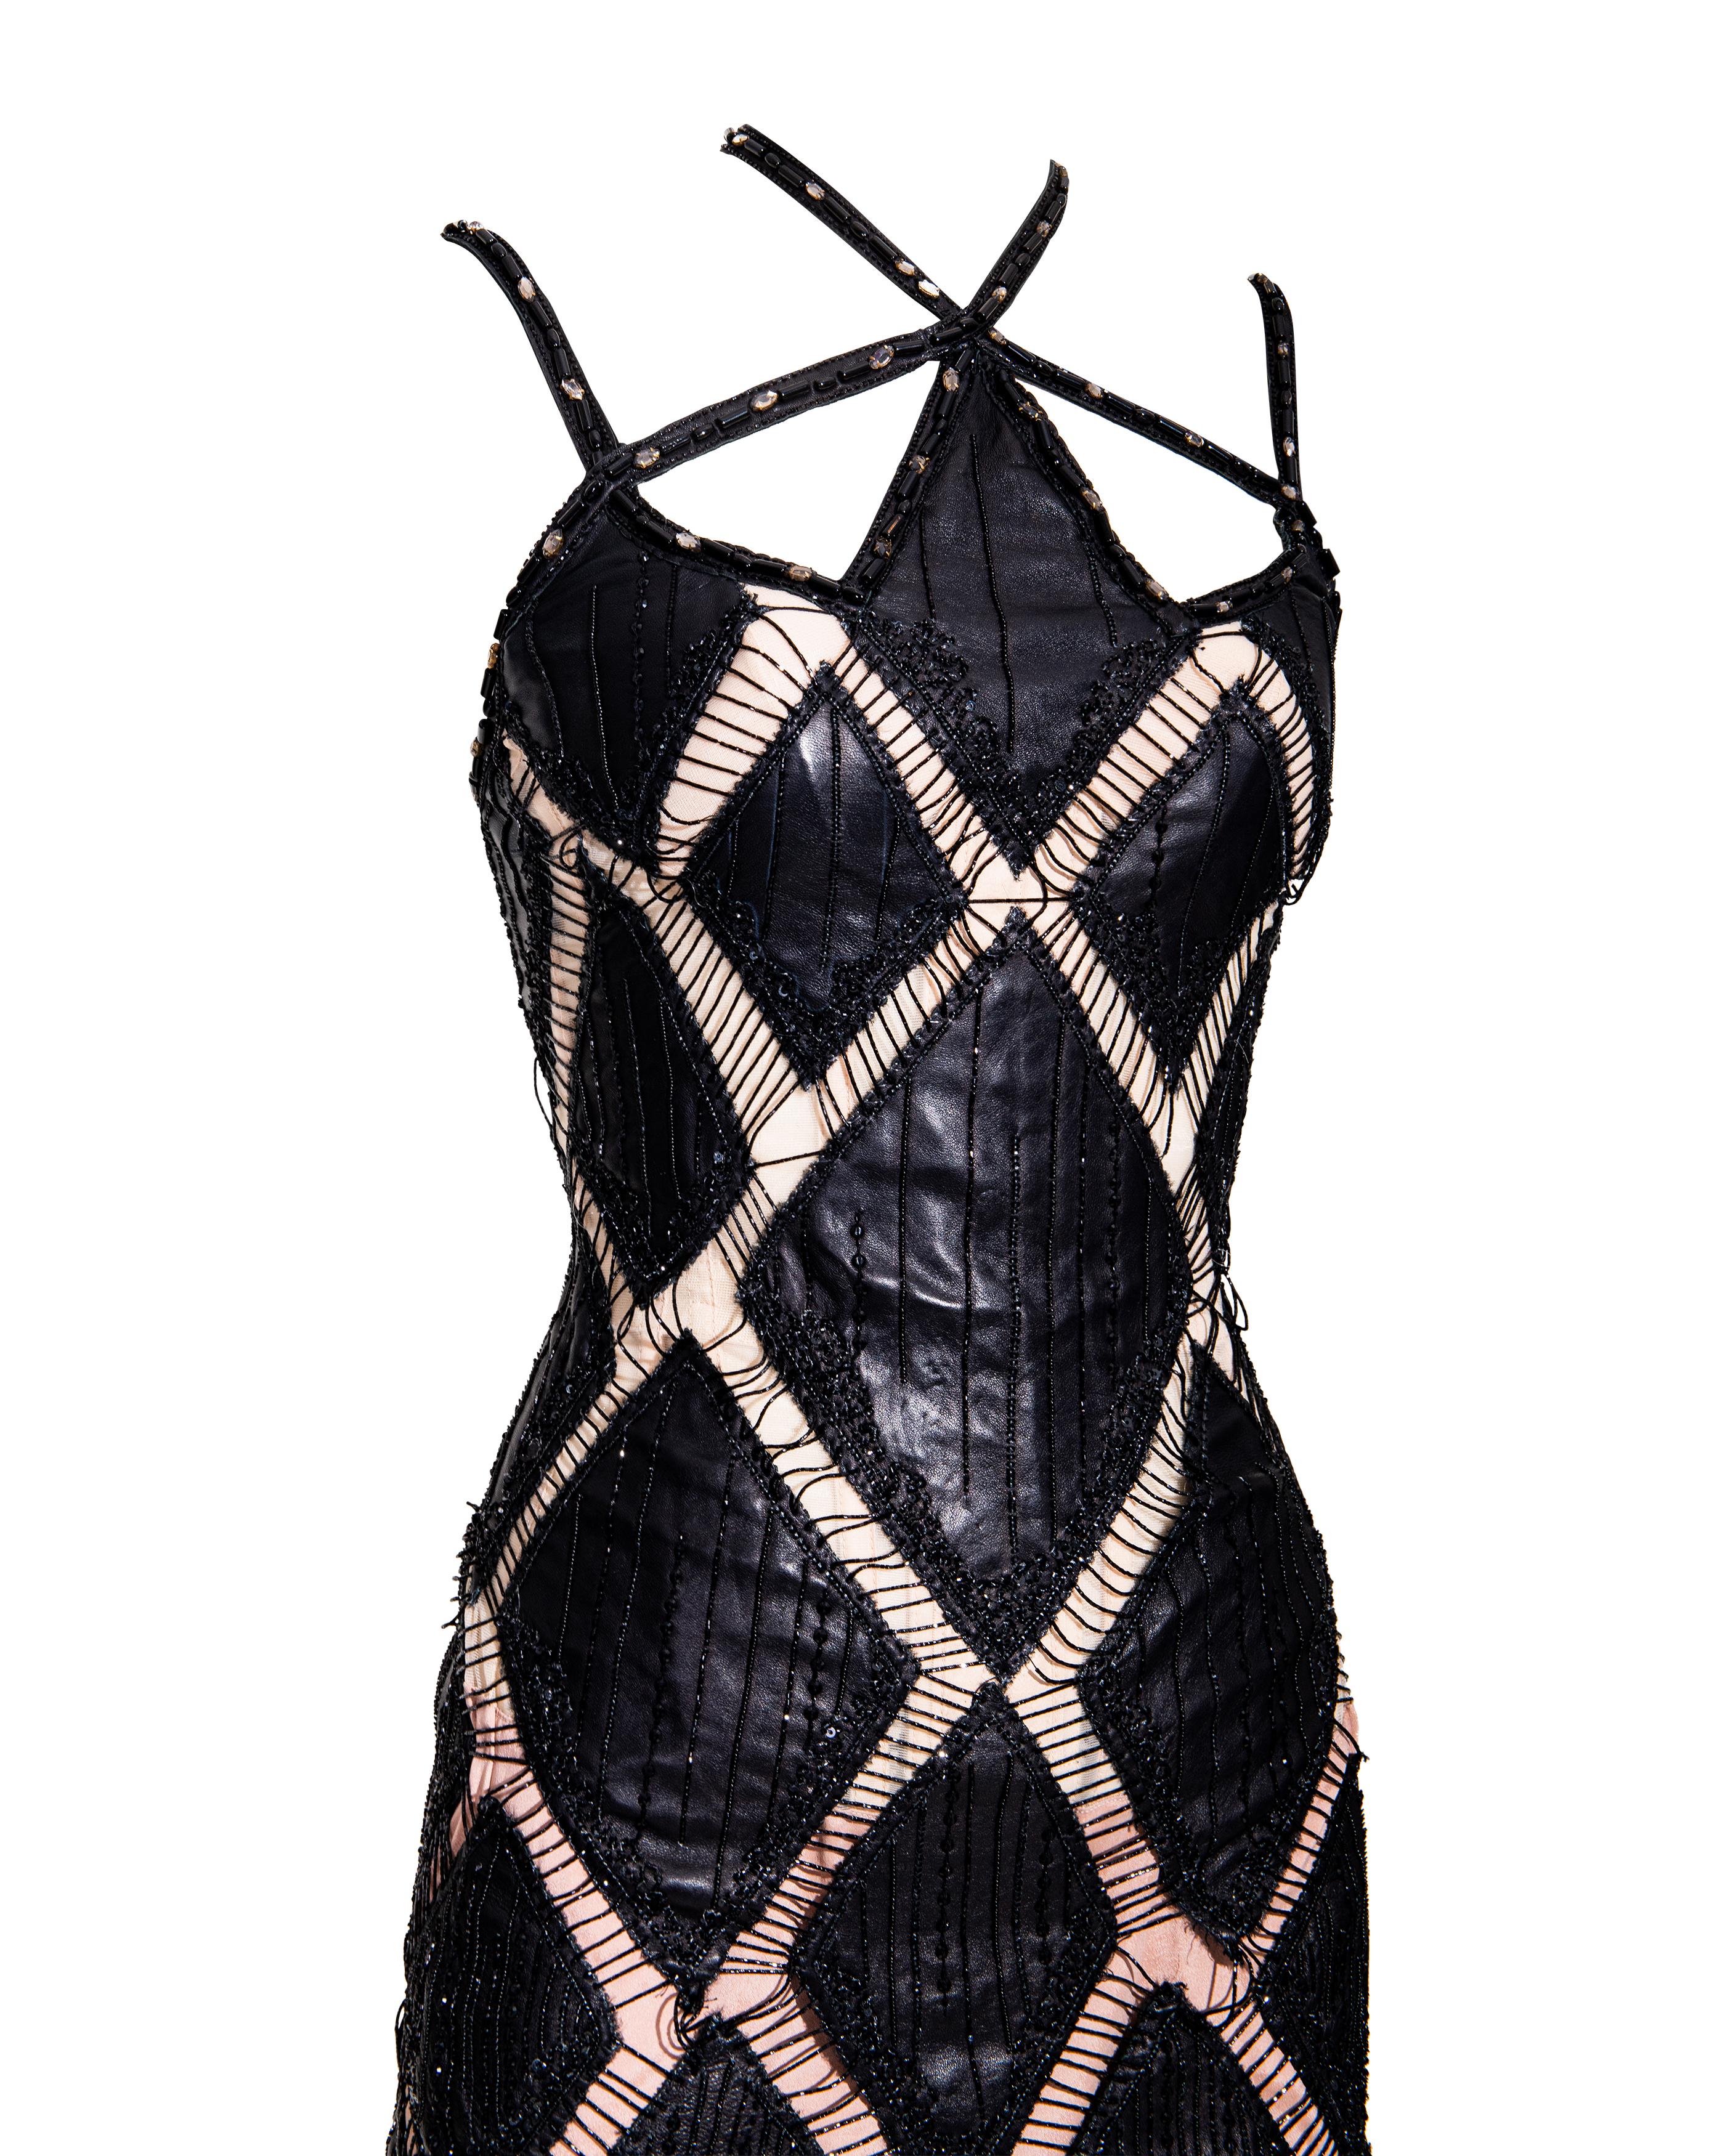 S/S 2004 Roberto Cavalli Geometric Black Embellished Leather Corset Fringe Dress 3